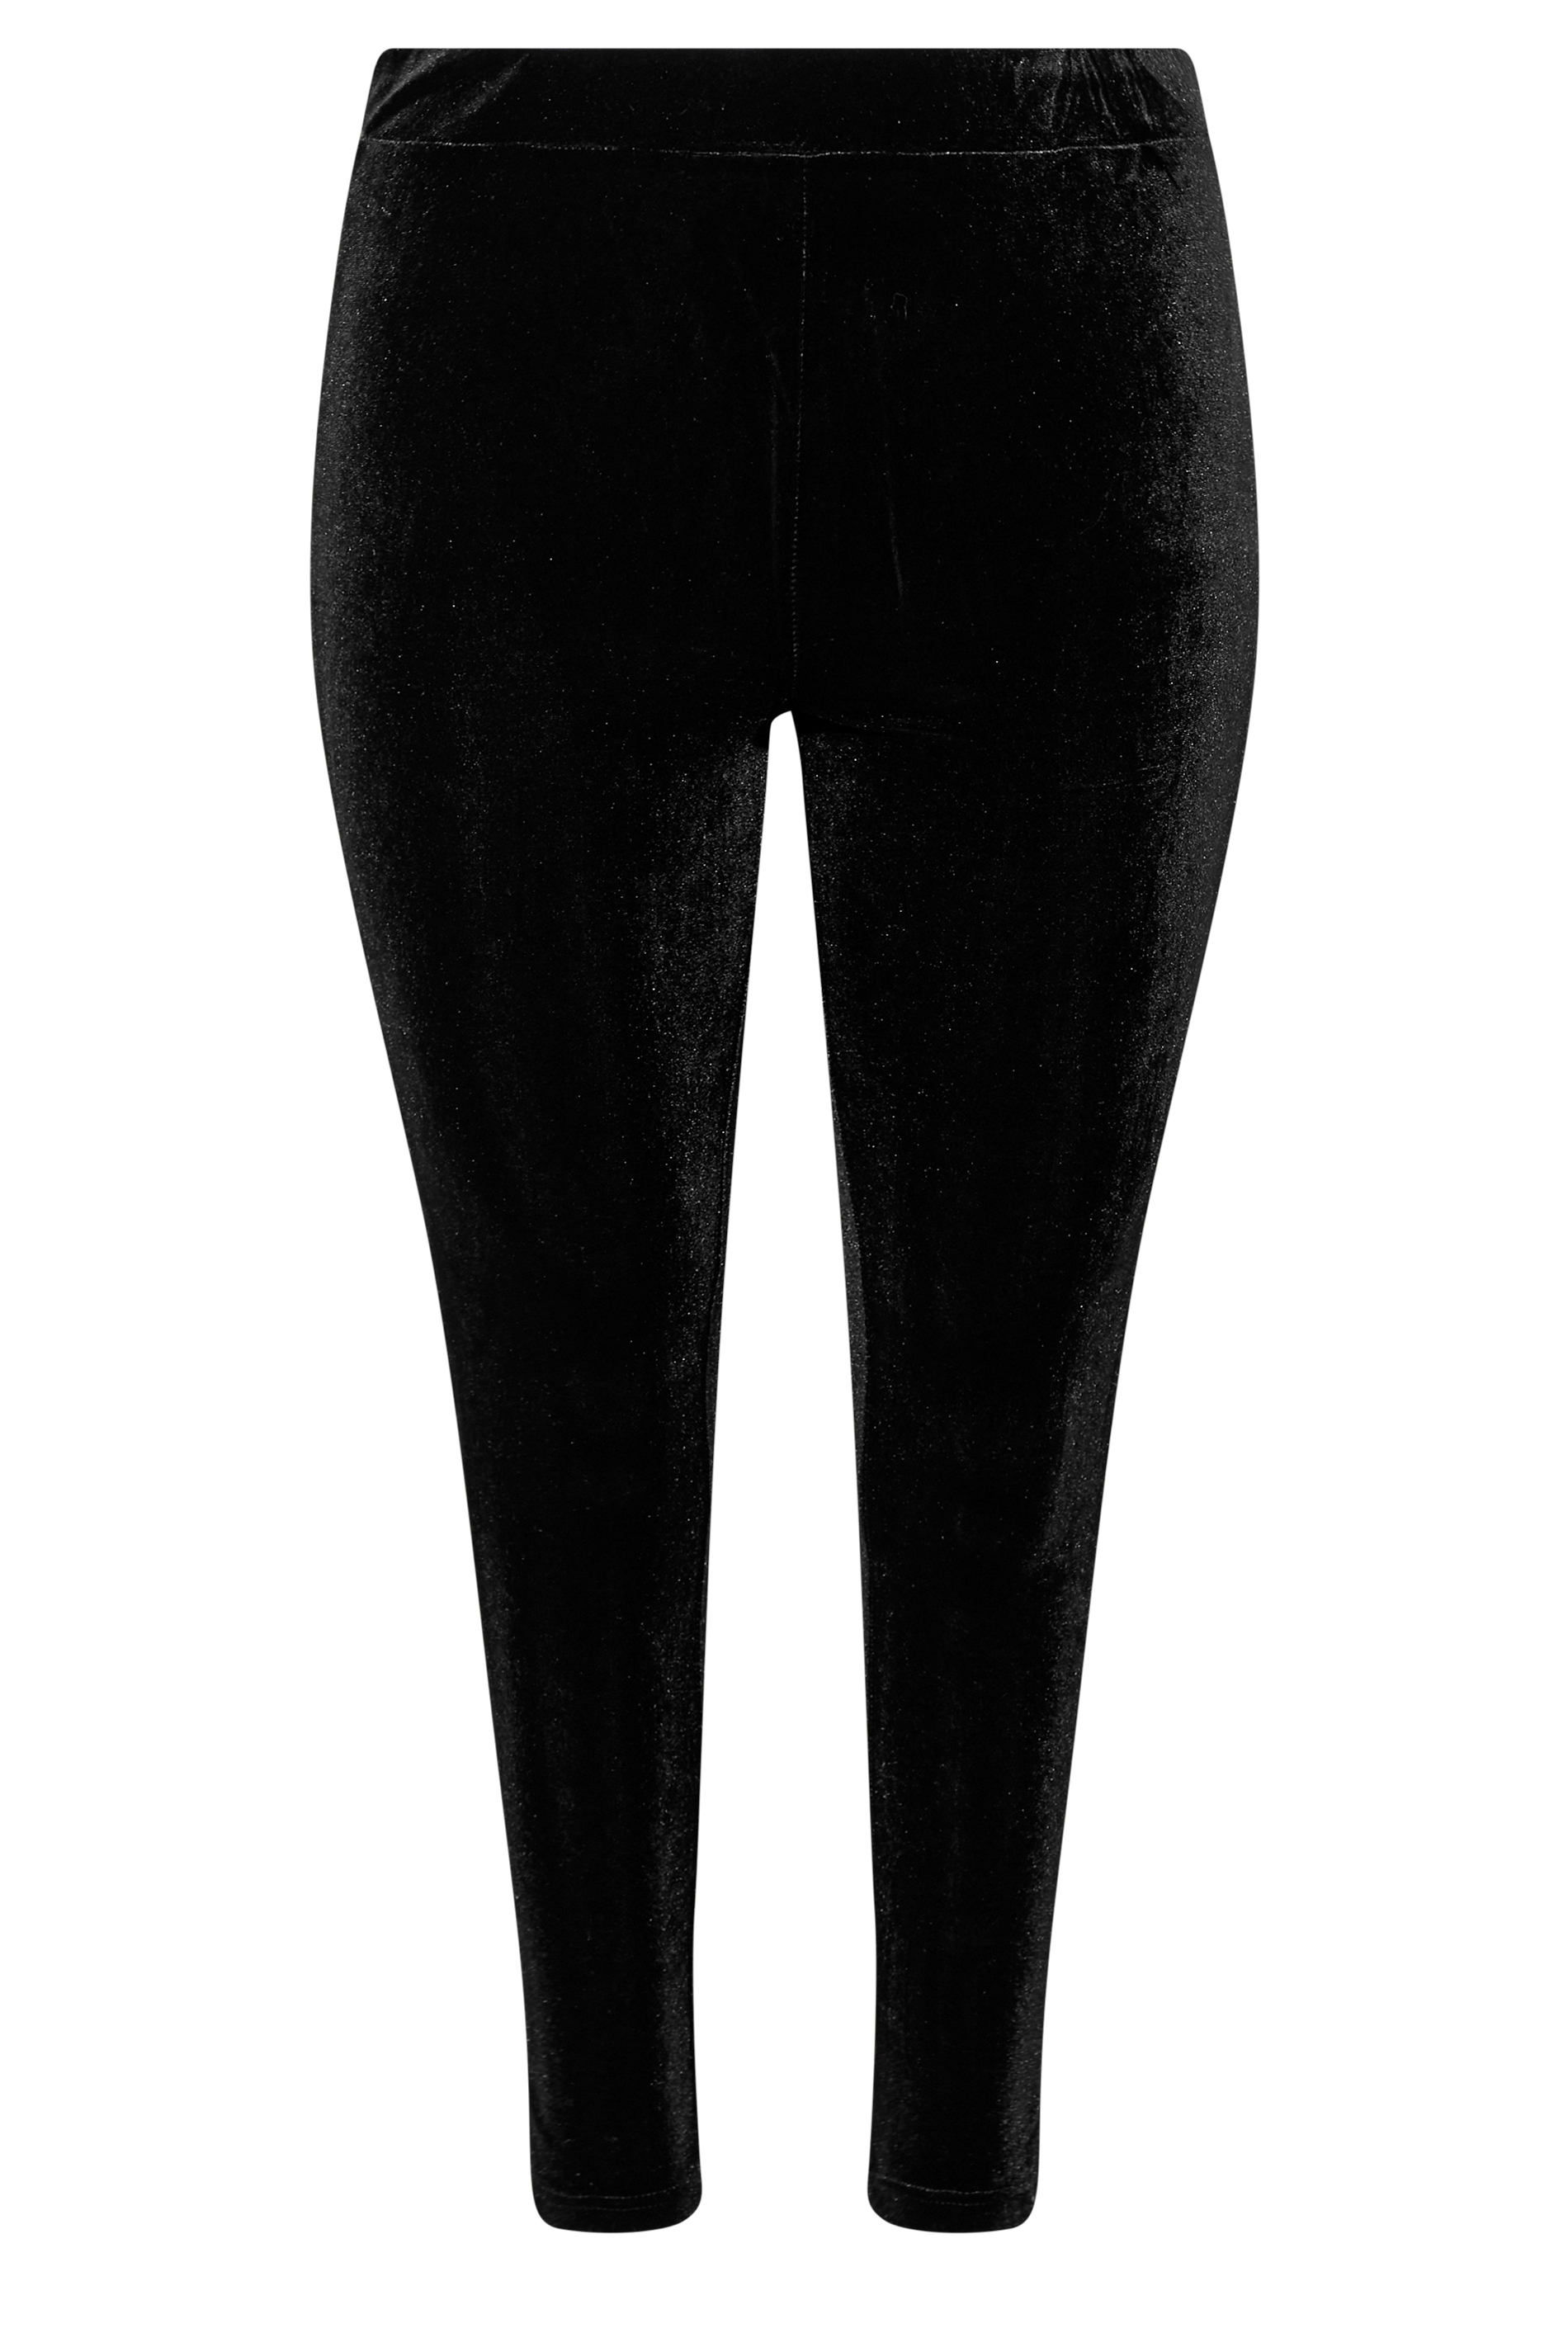 LAVRA Women's Plus Size Velvet Leggings High Wasited Warm Stretch Pants -  Walmart.com